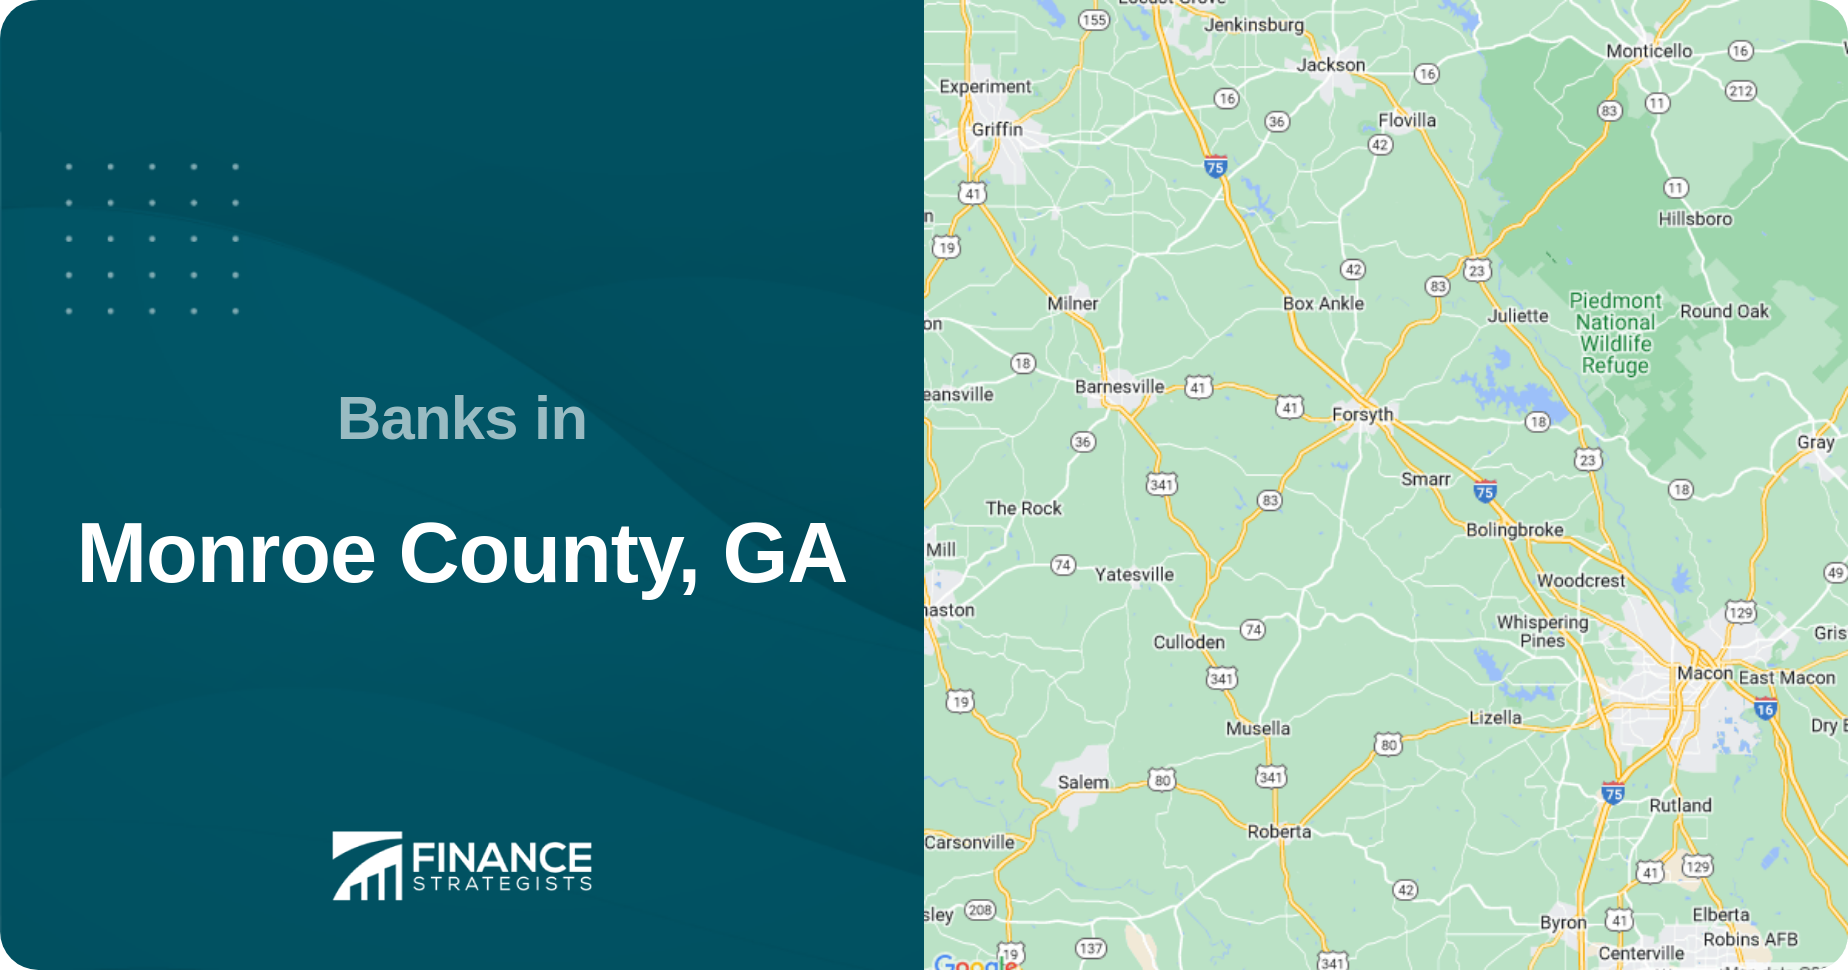 Banks in Monroe County, GA